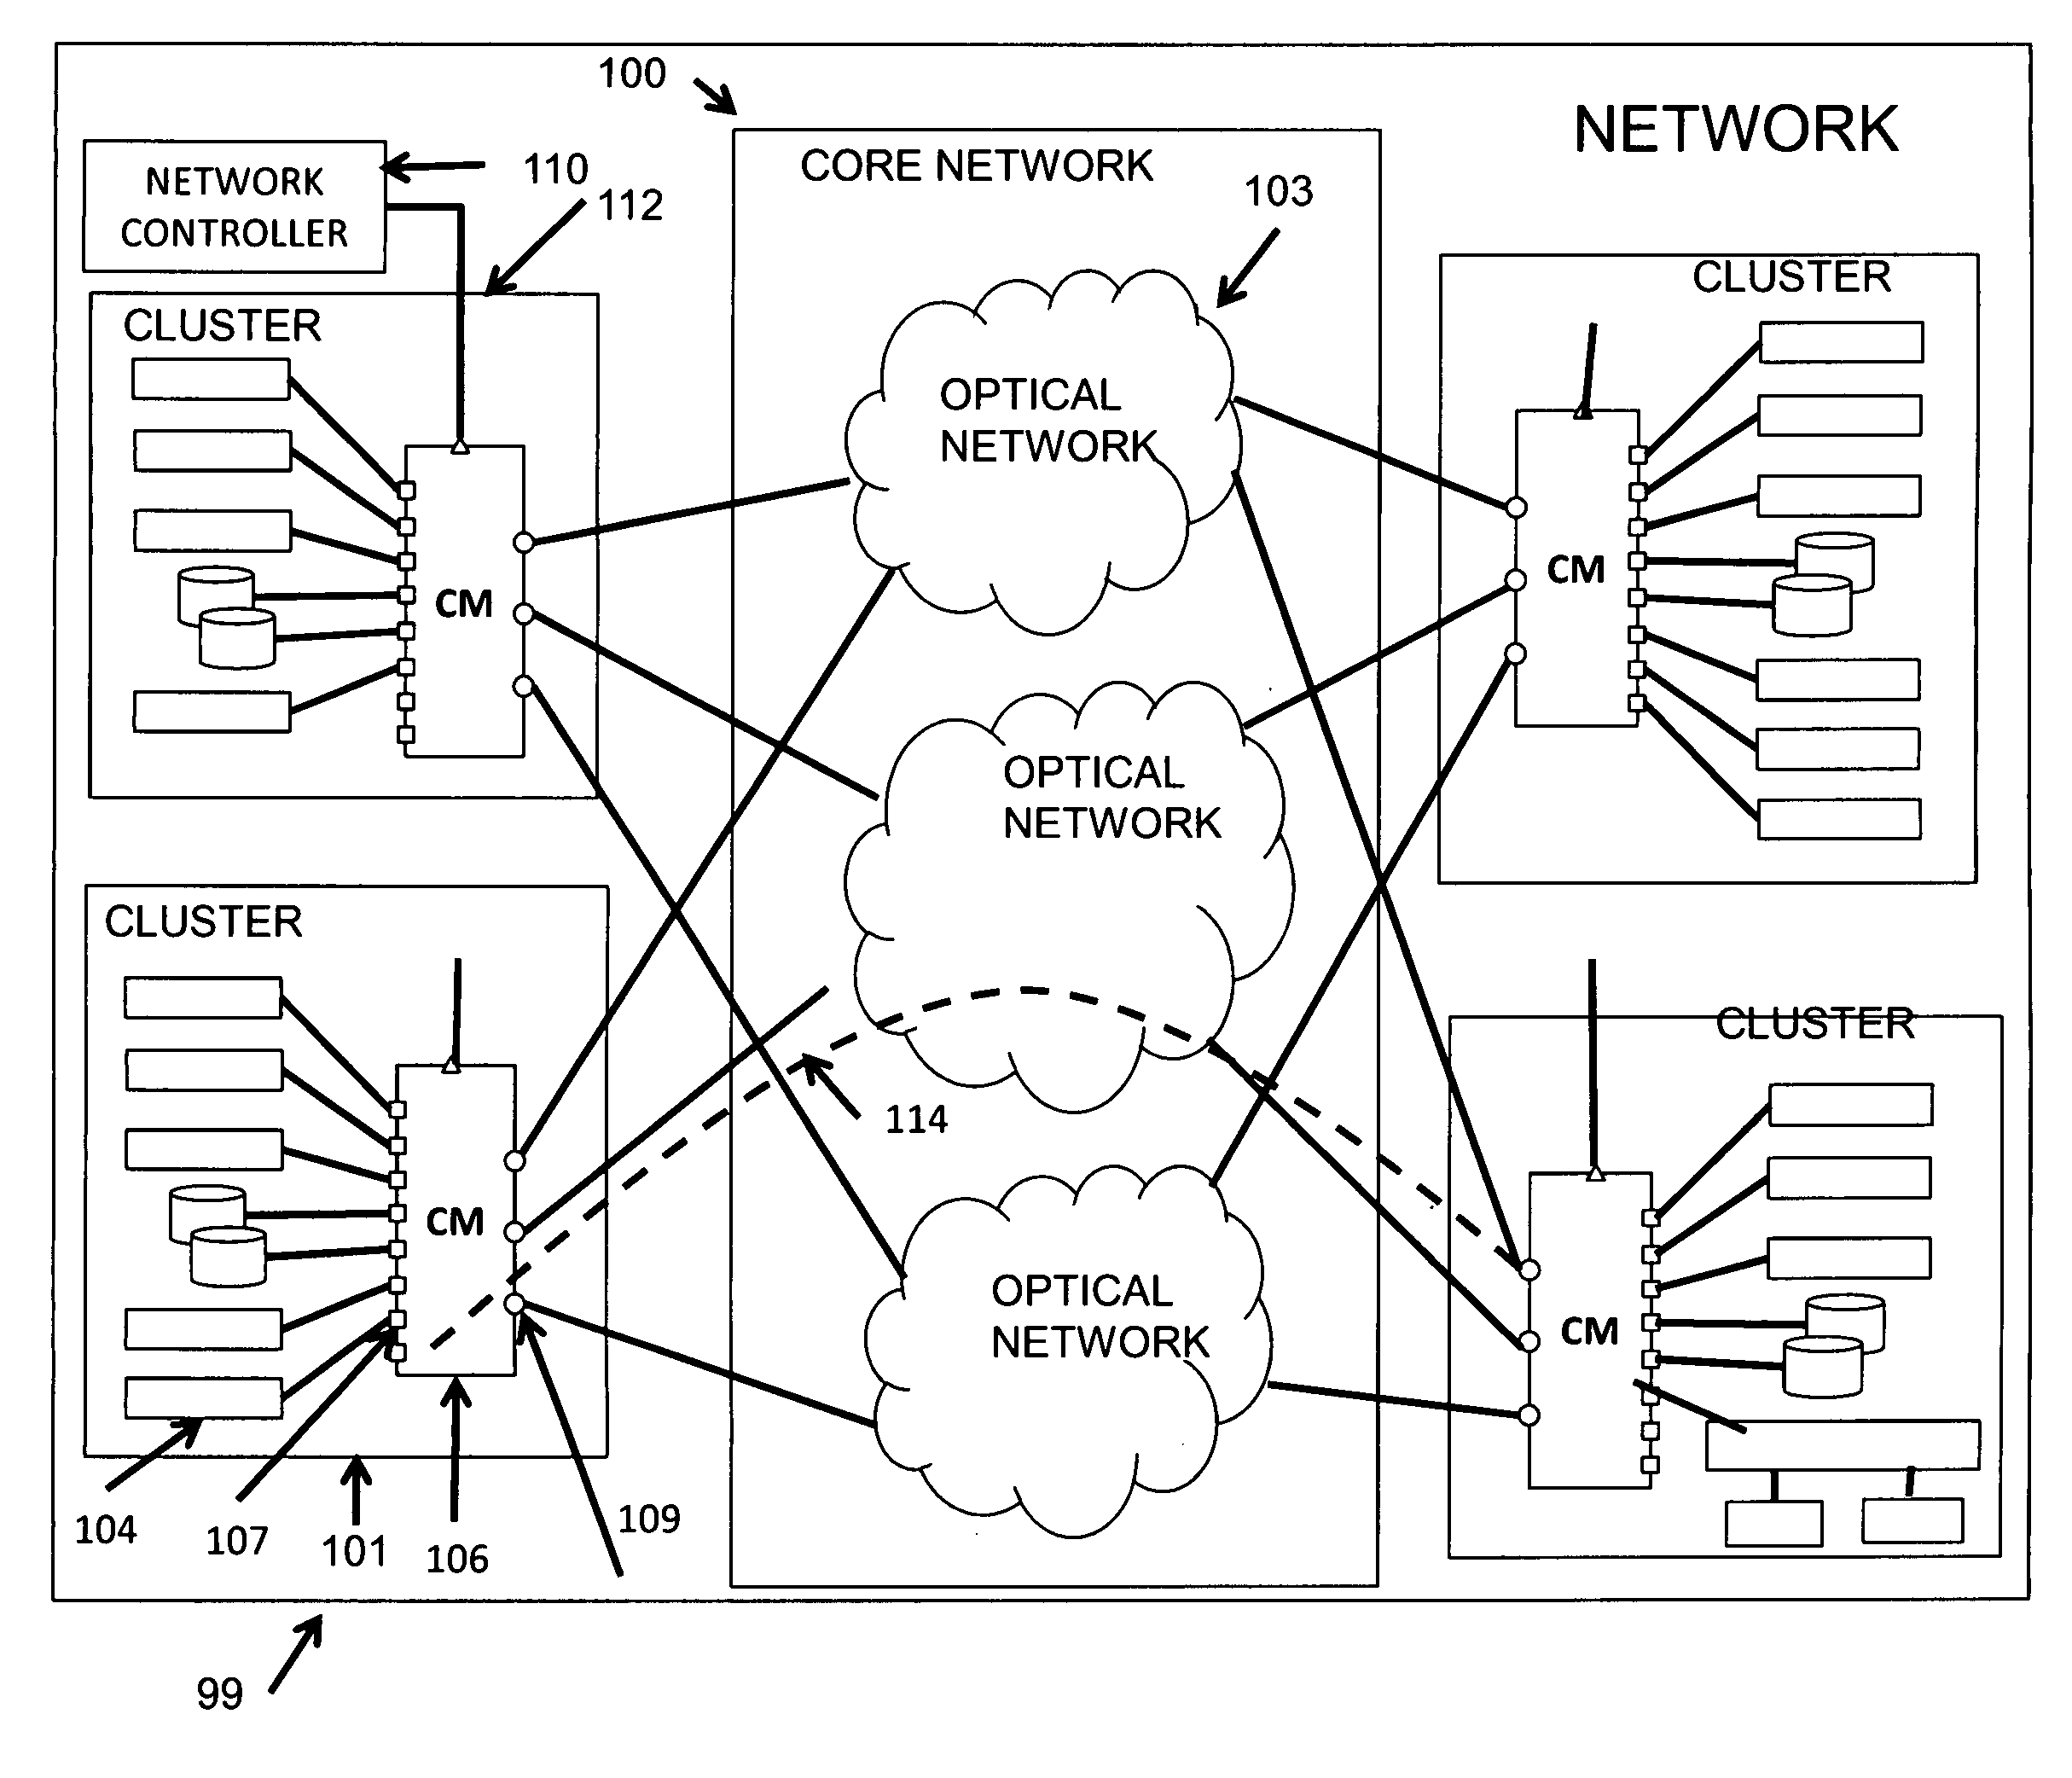 All-optical data center network